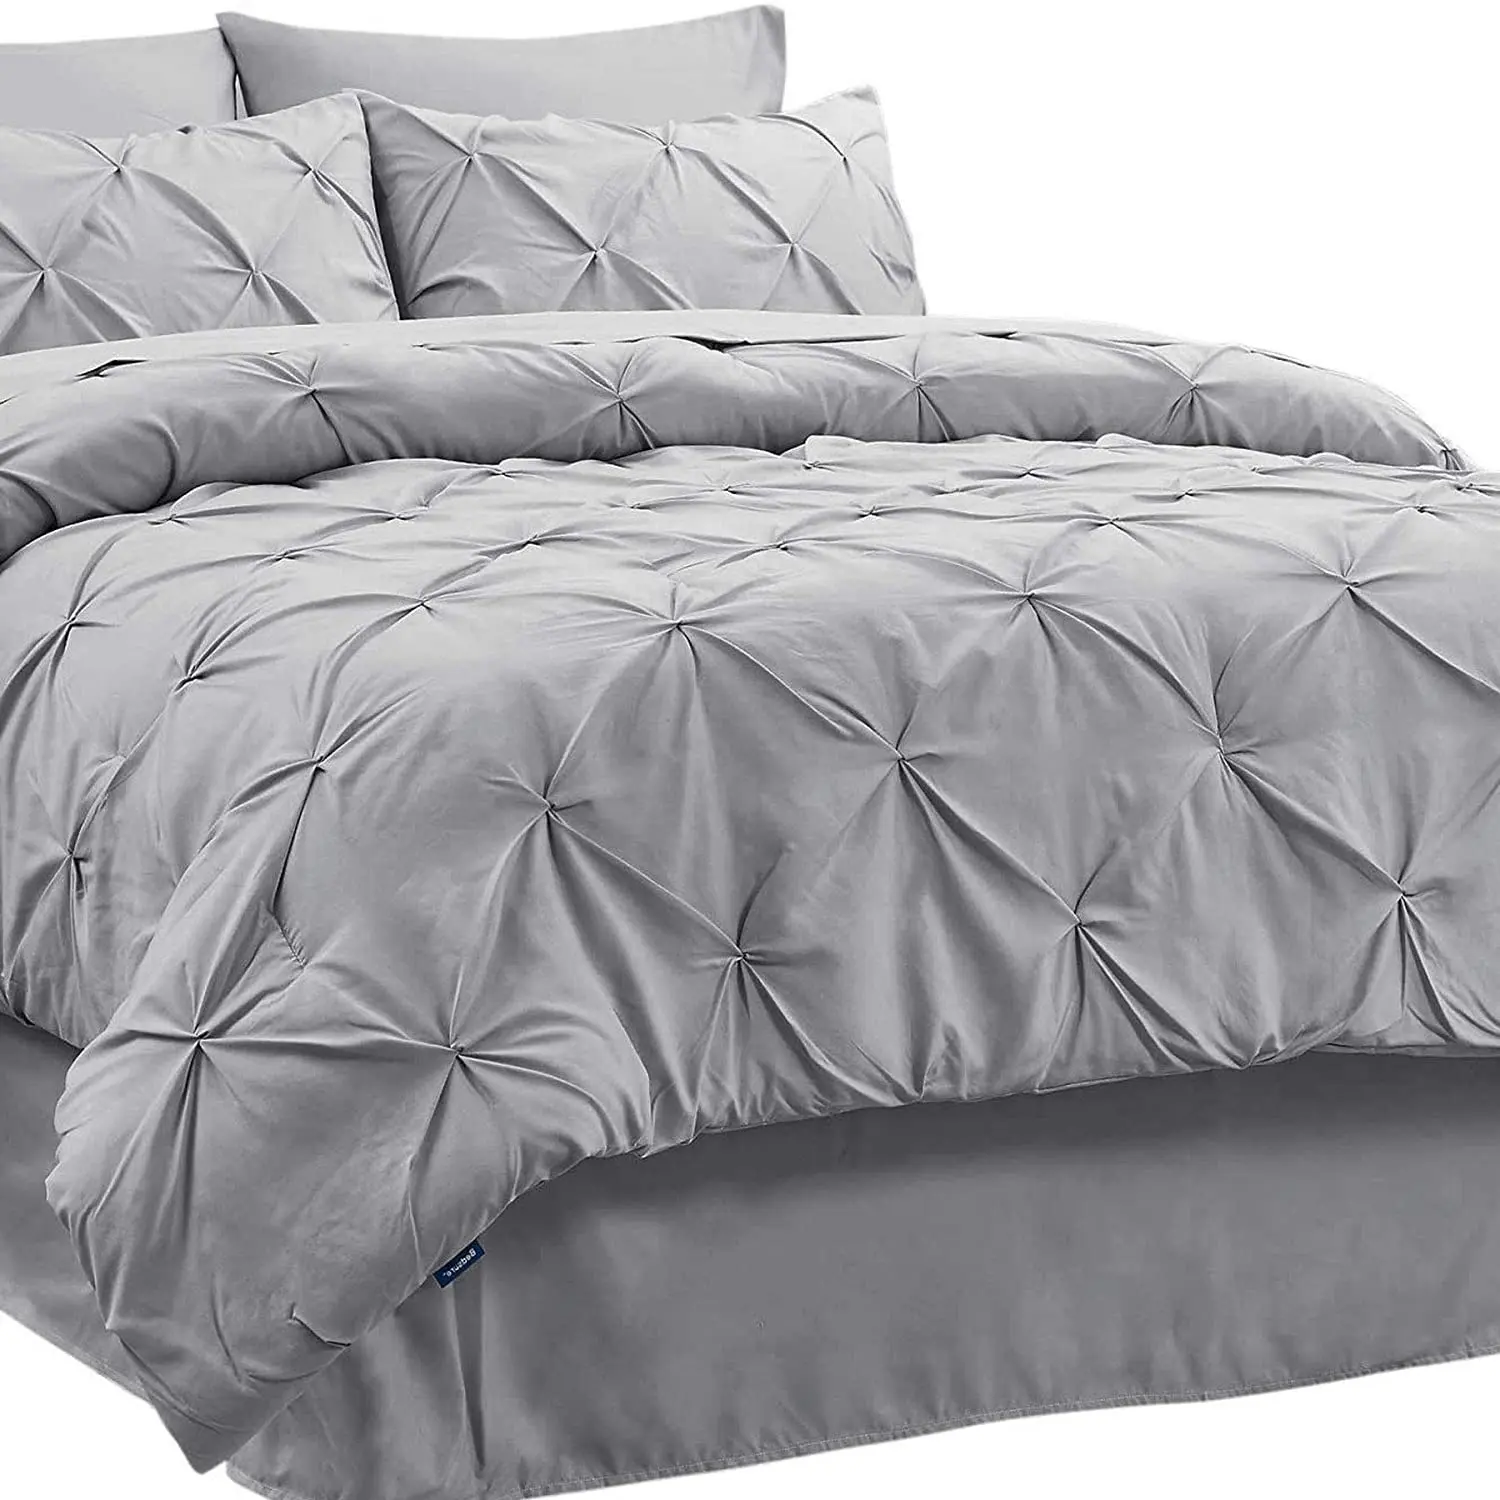 Wholesale price  comforter luxury microfiber polyester bedding sheet set channel 4-pcs bedding set